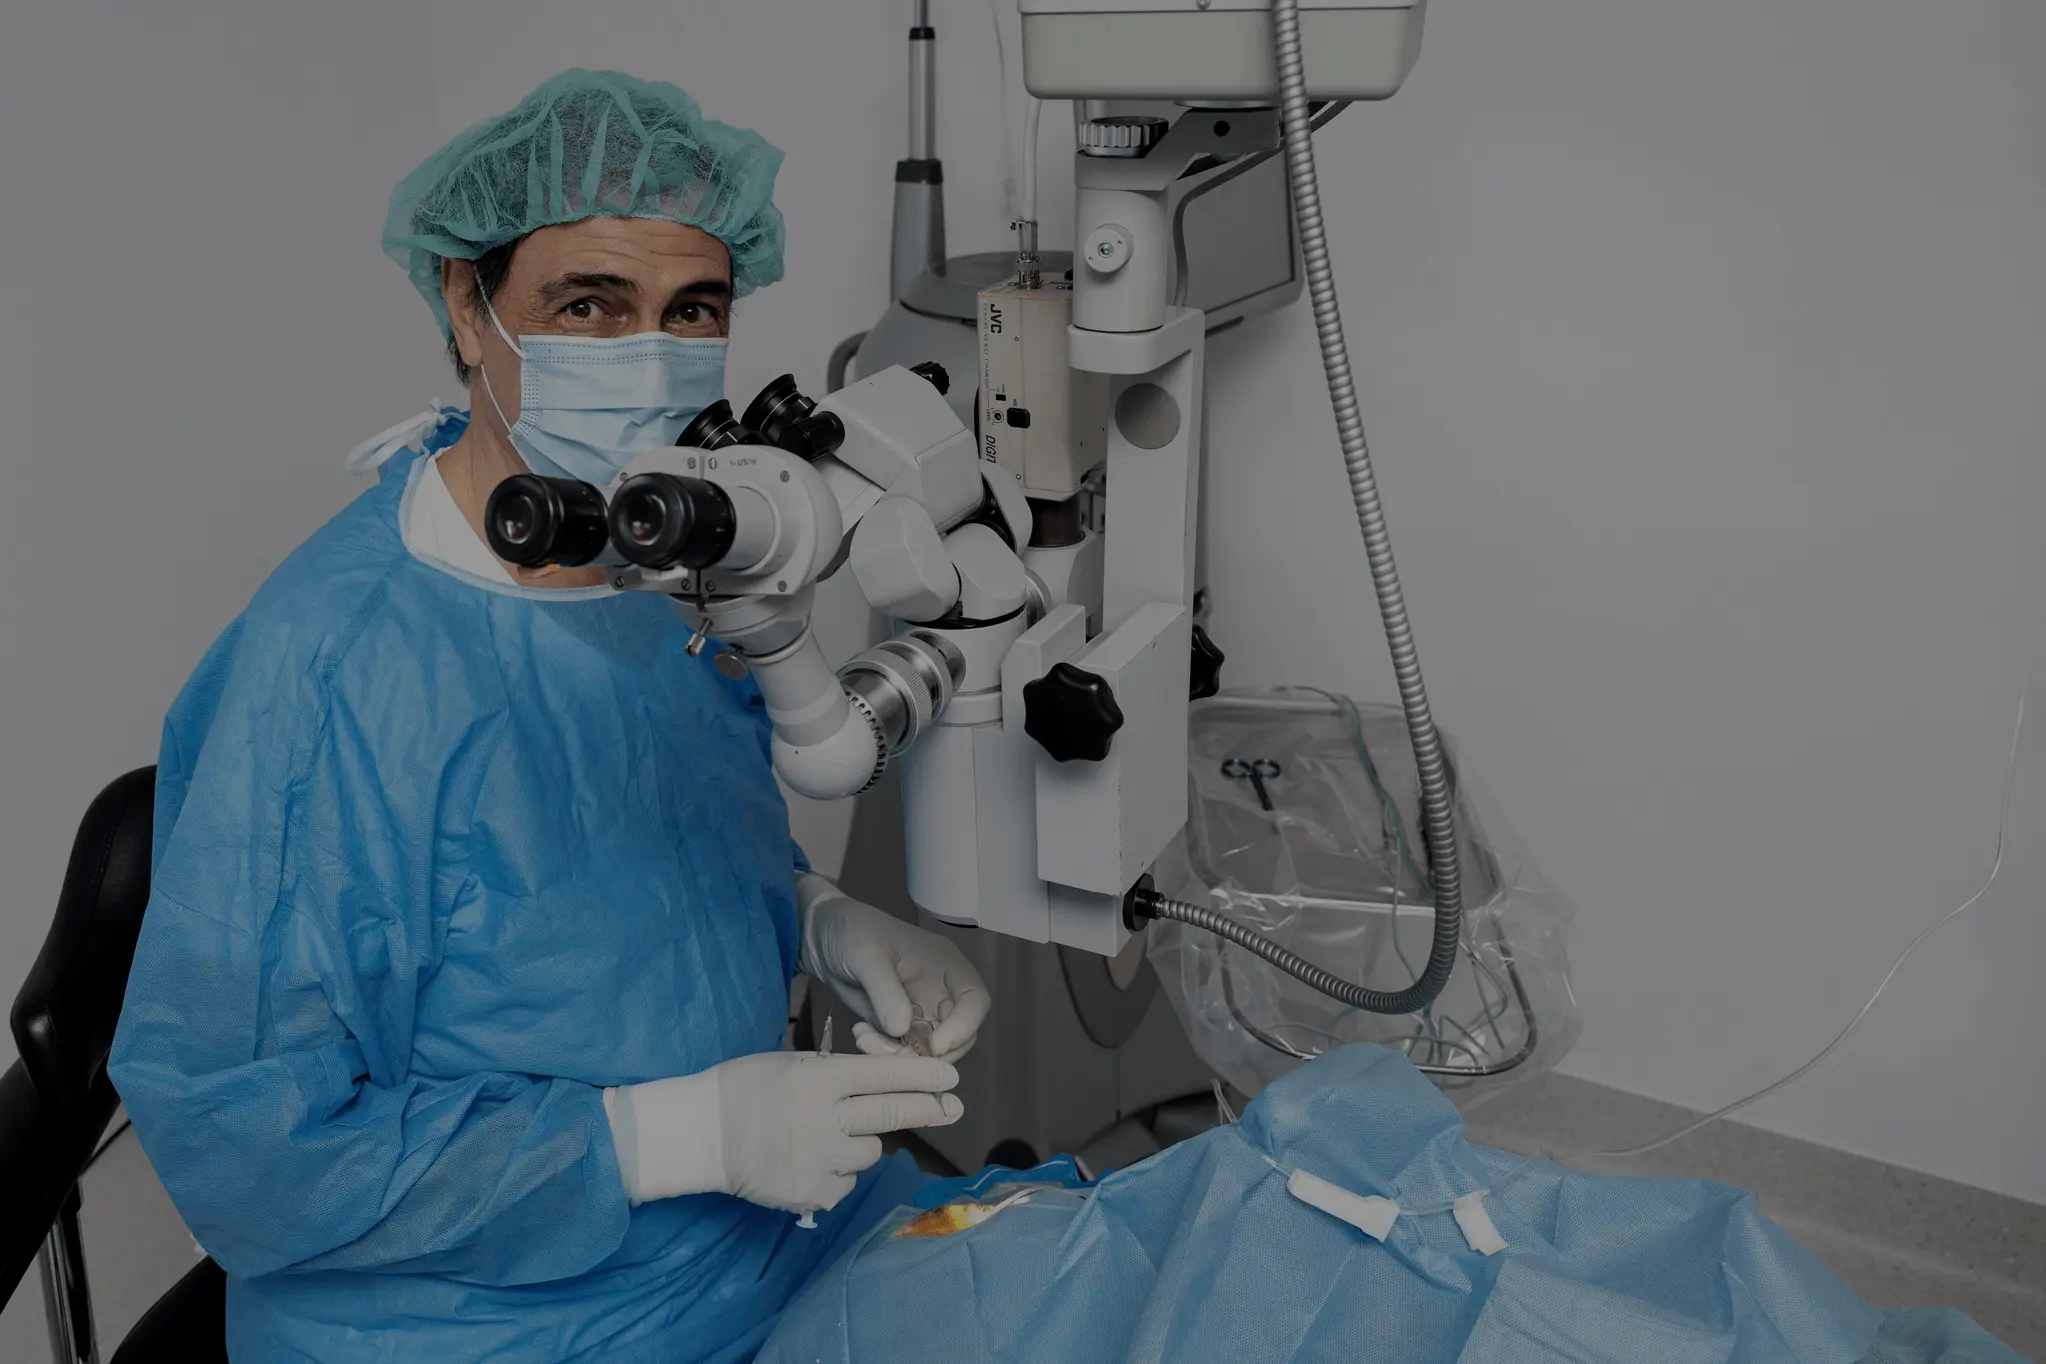 Cunoaste-i pe medicii nostri oftalmologi | Visionclinic